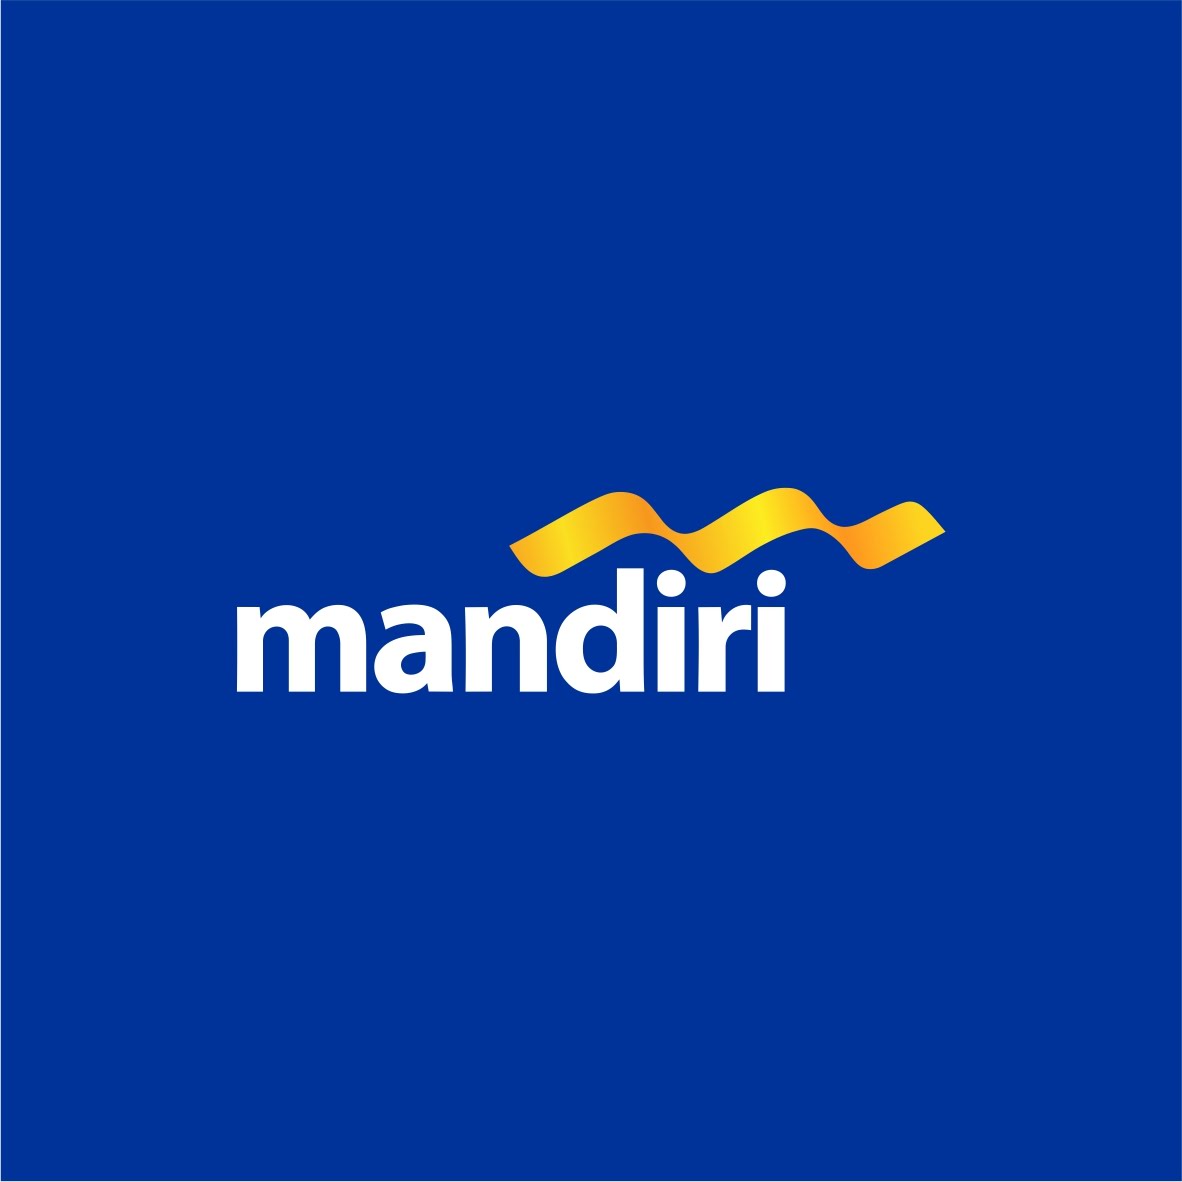 Download File Vector  Logo  Bank Mandiri  High quality file 